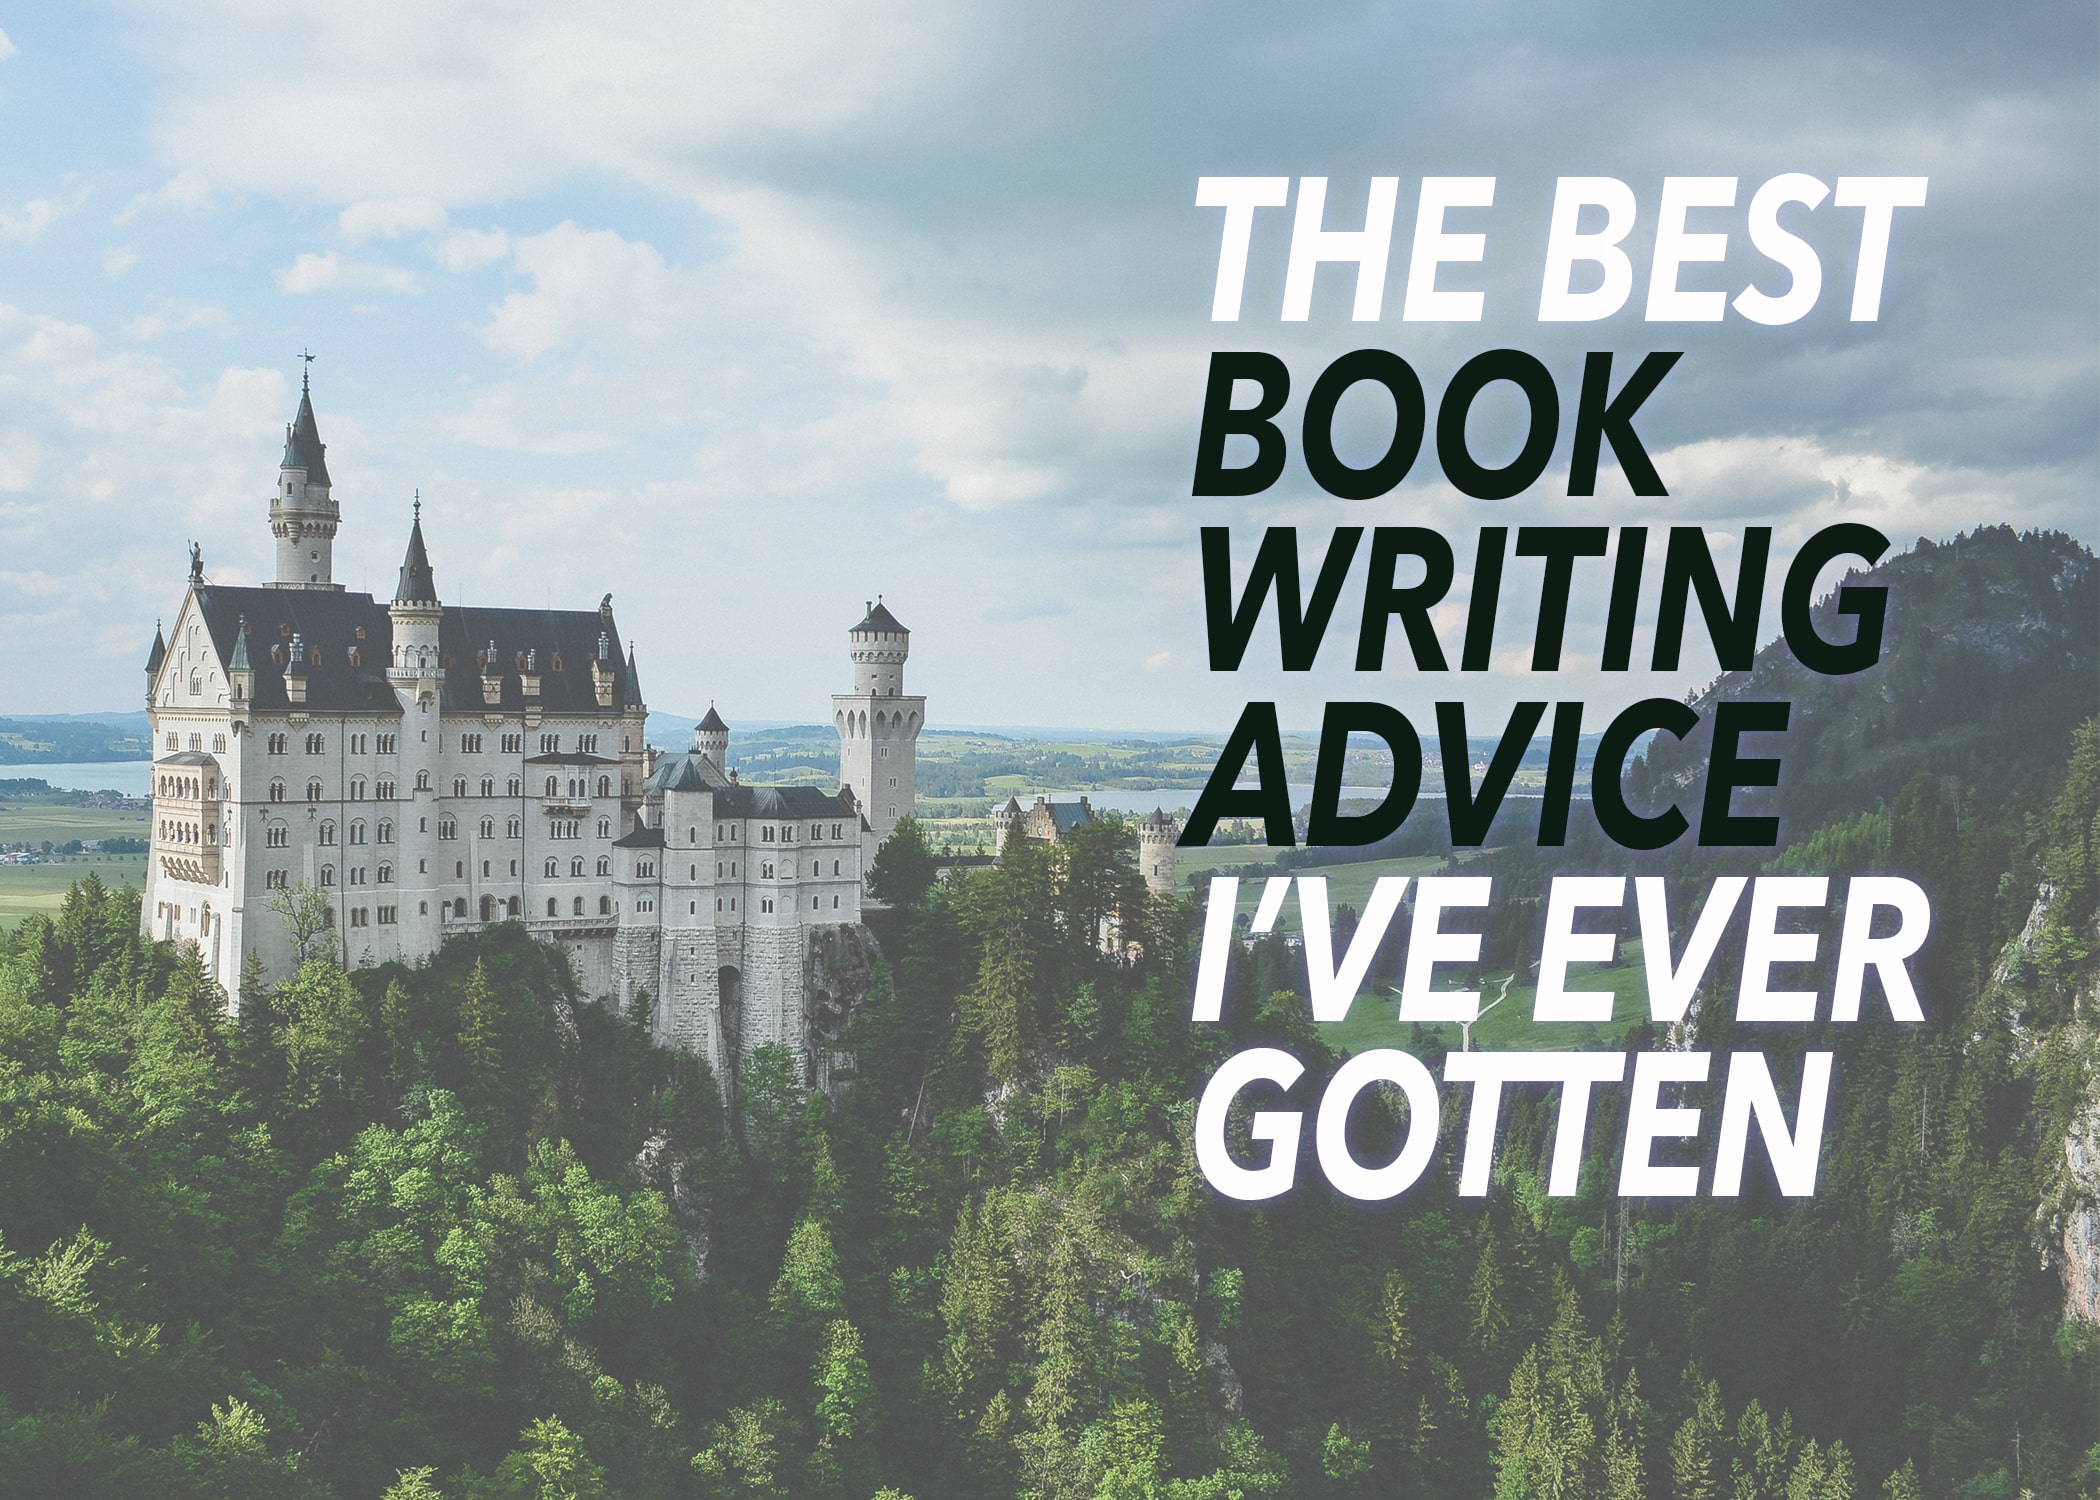 The Best Book Writing Advice I’ve Ever Gotten